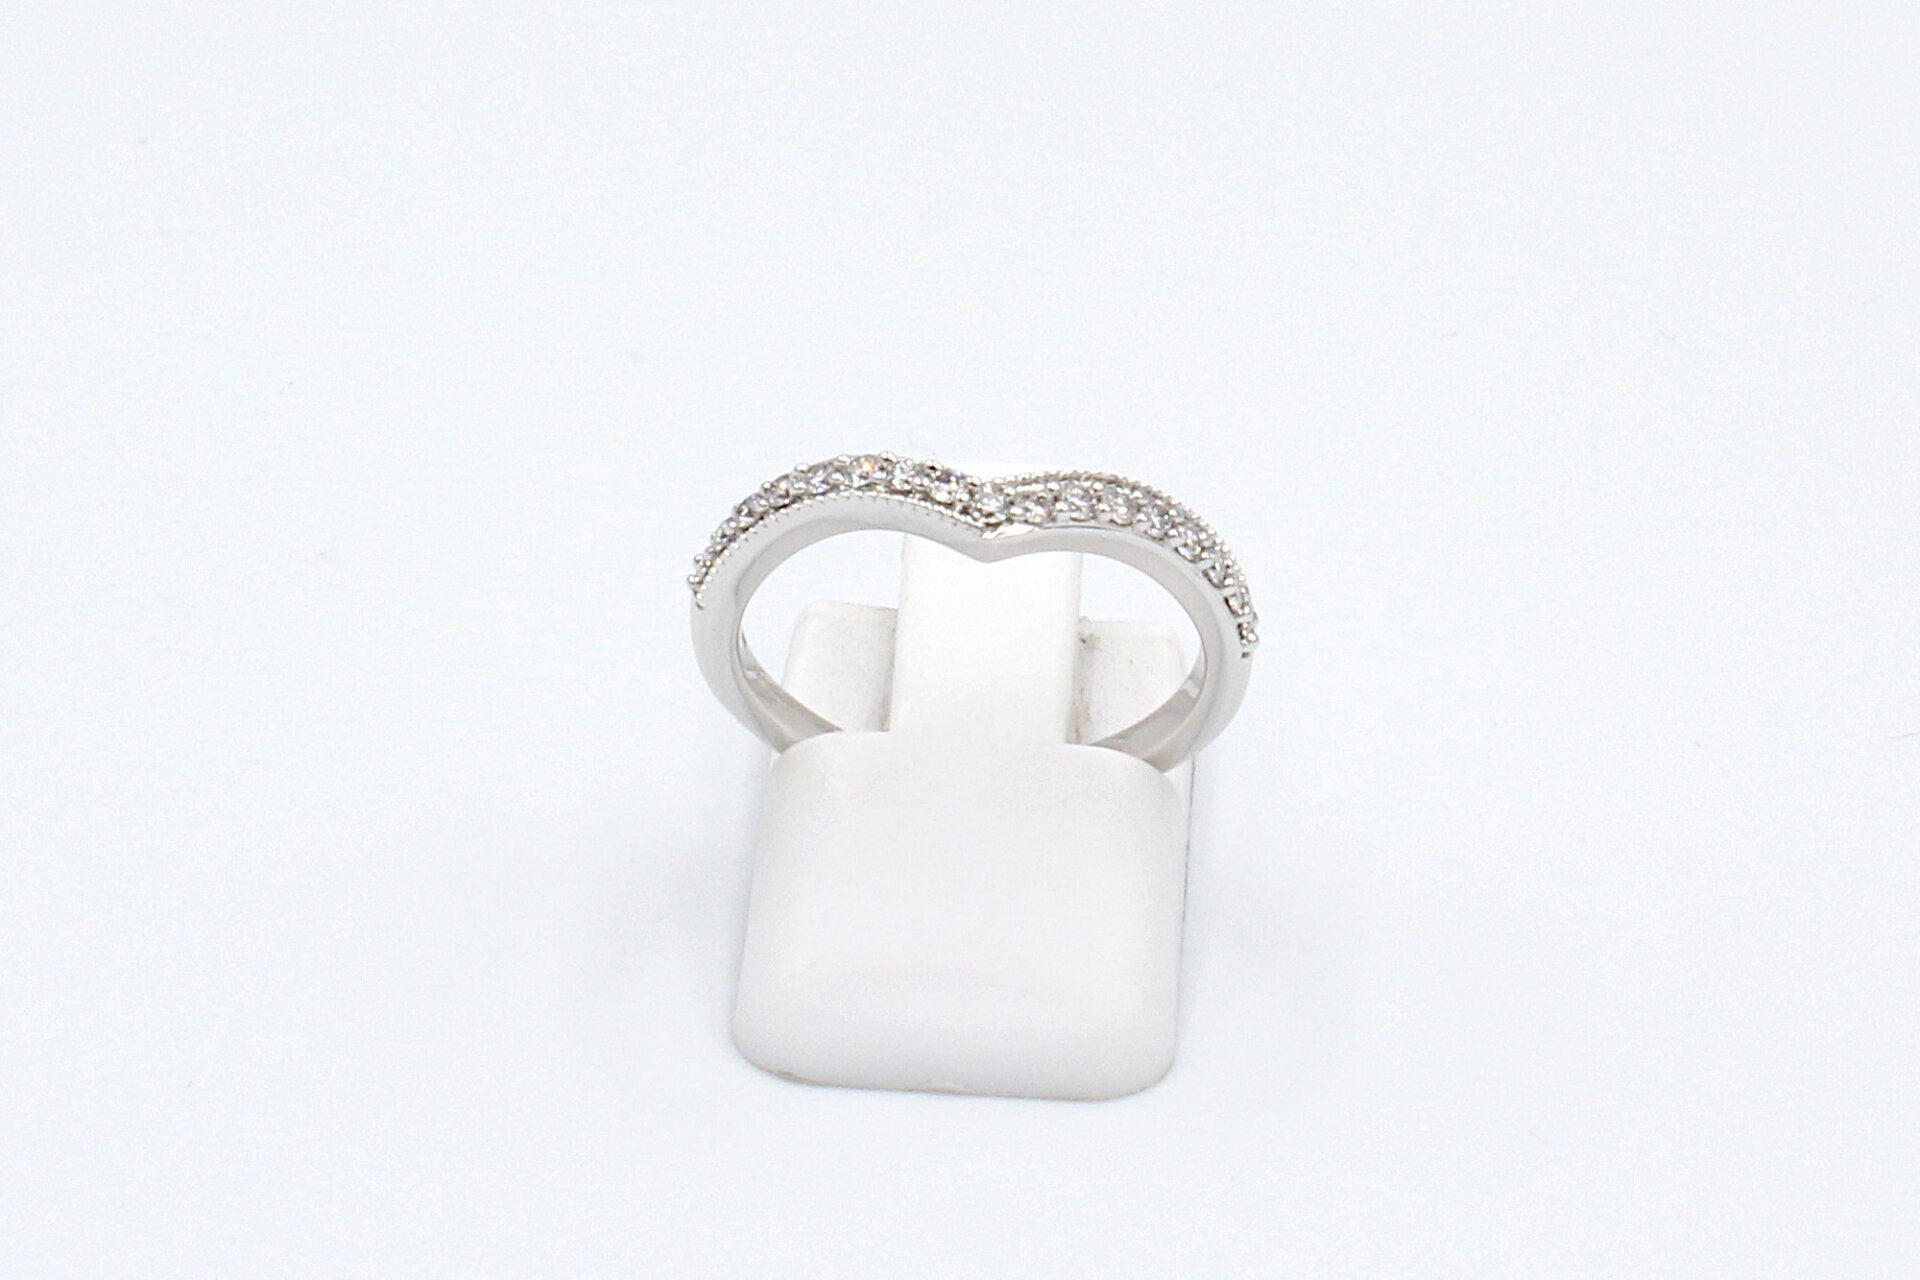 top view of a diamond wishbone wedding ring